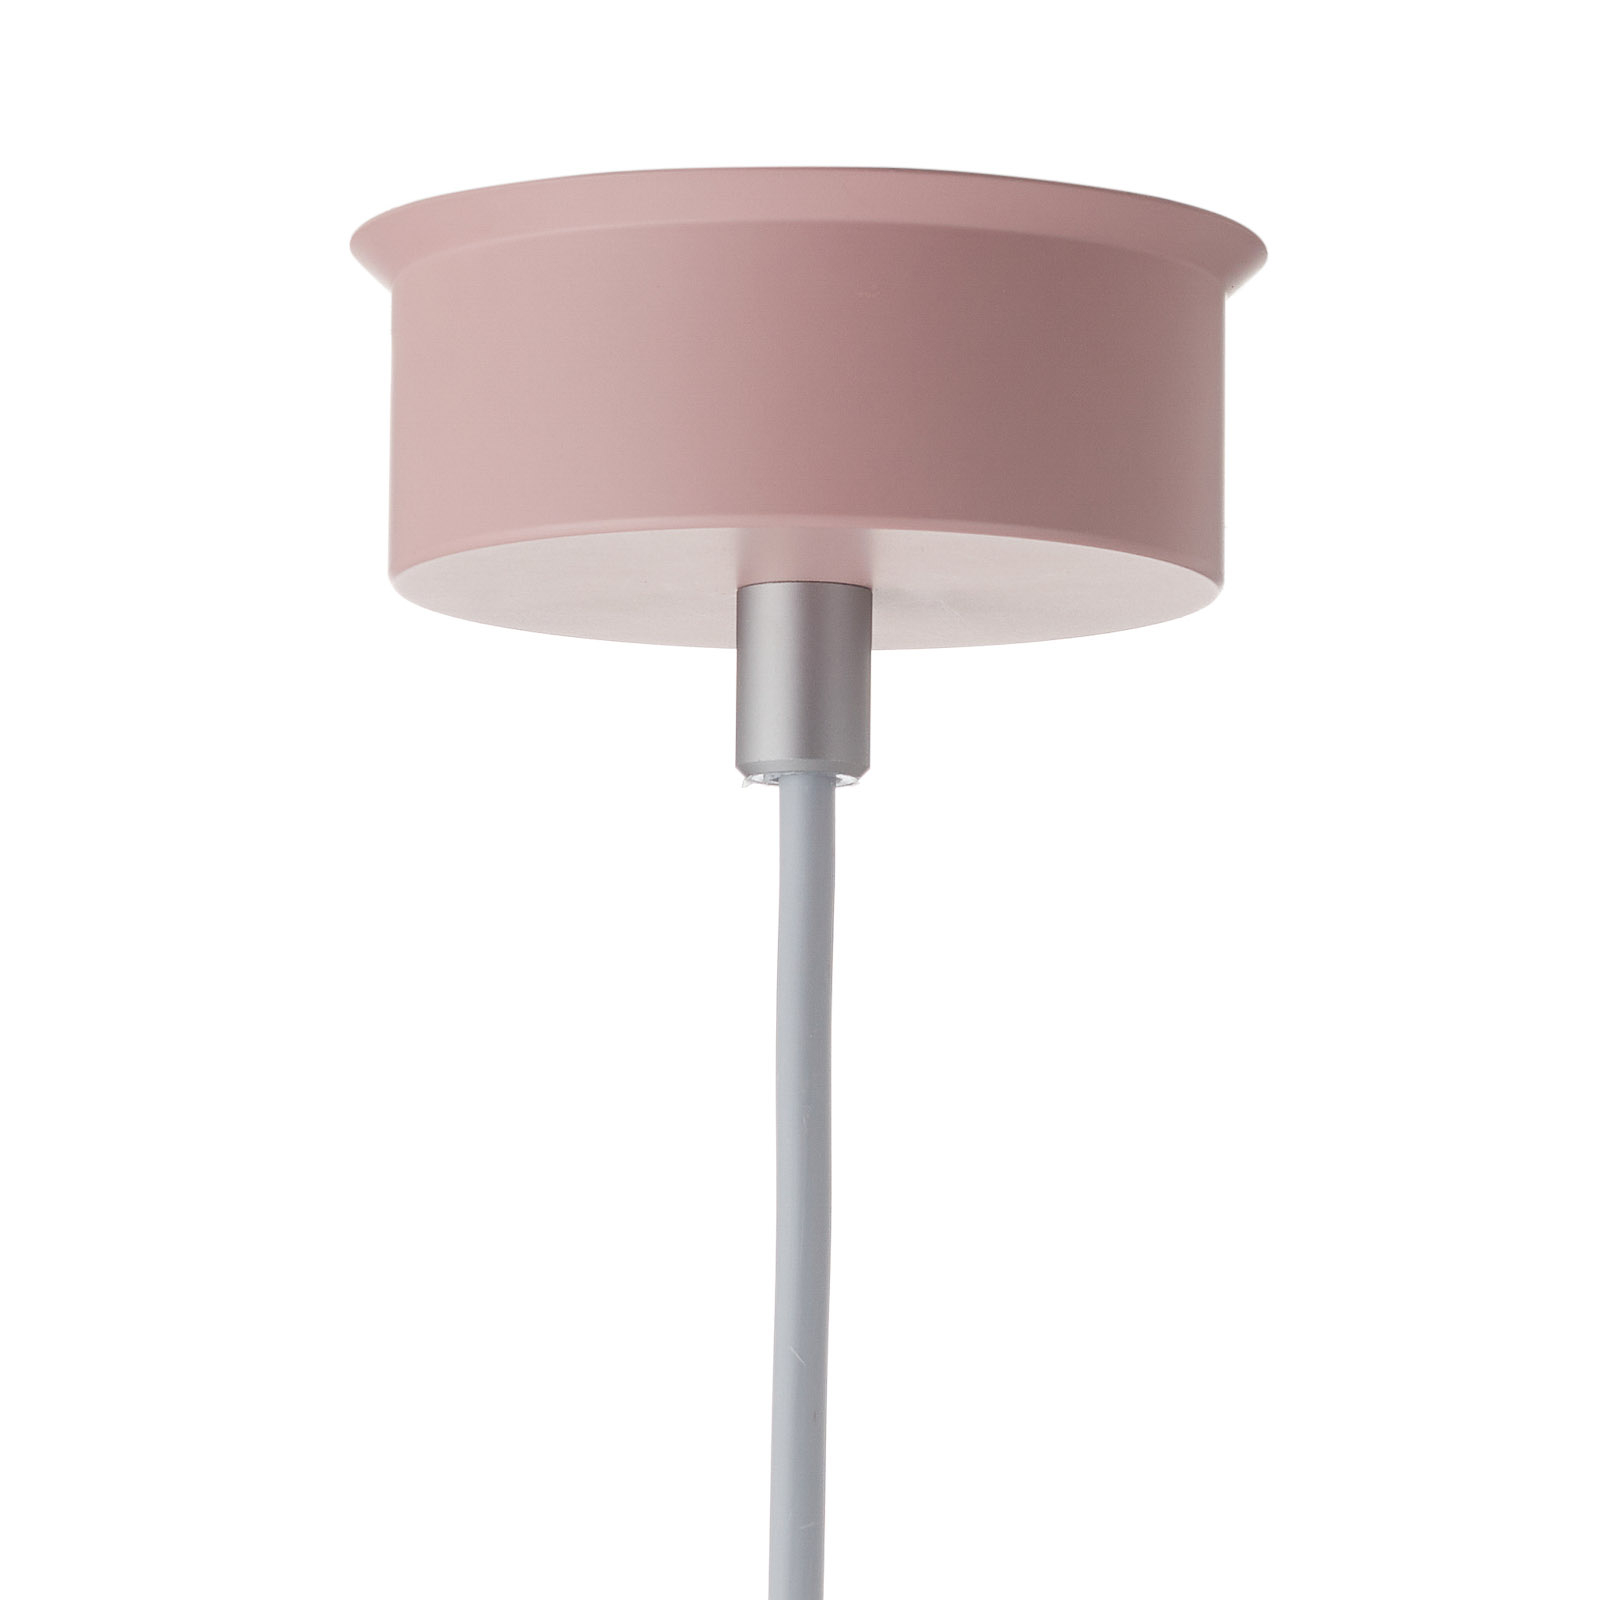 Anglepoise Type 80 hanglamp, rosé